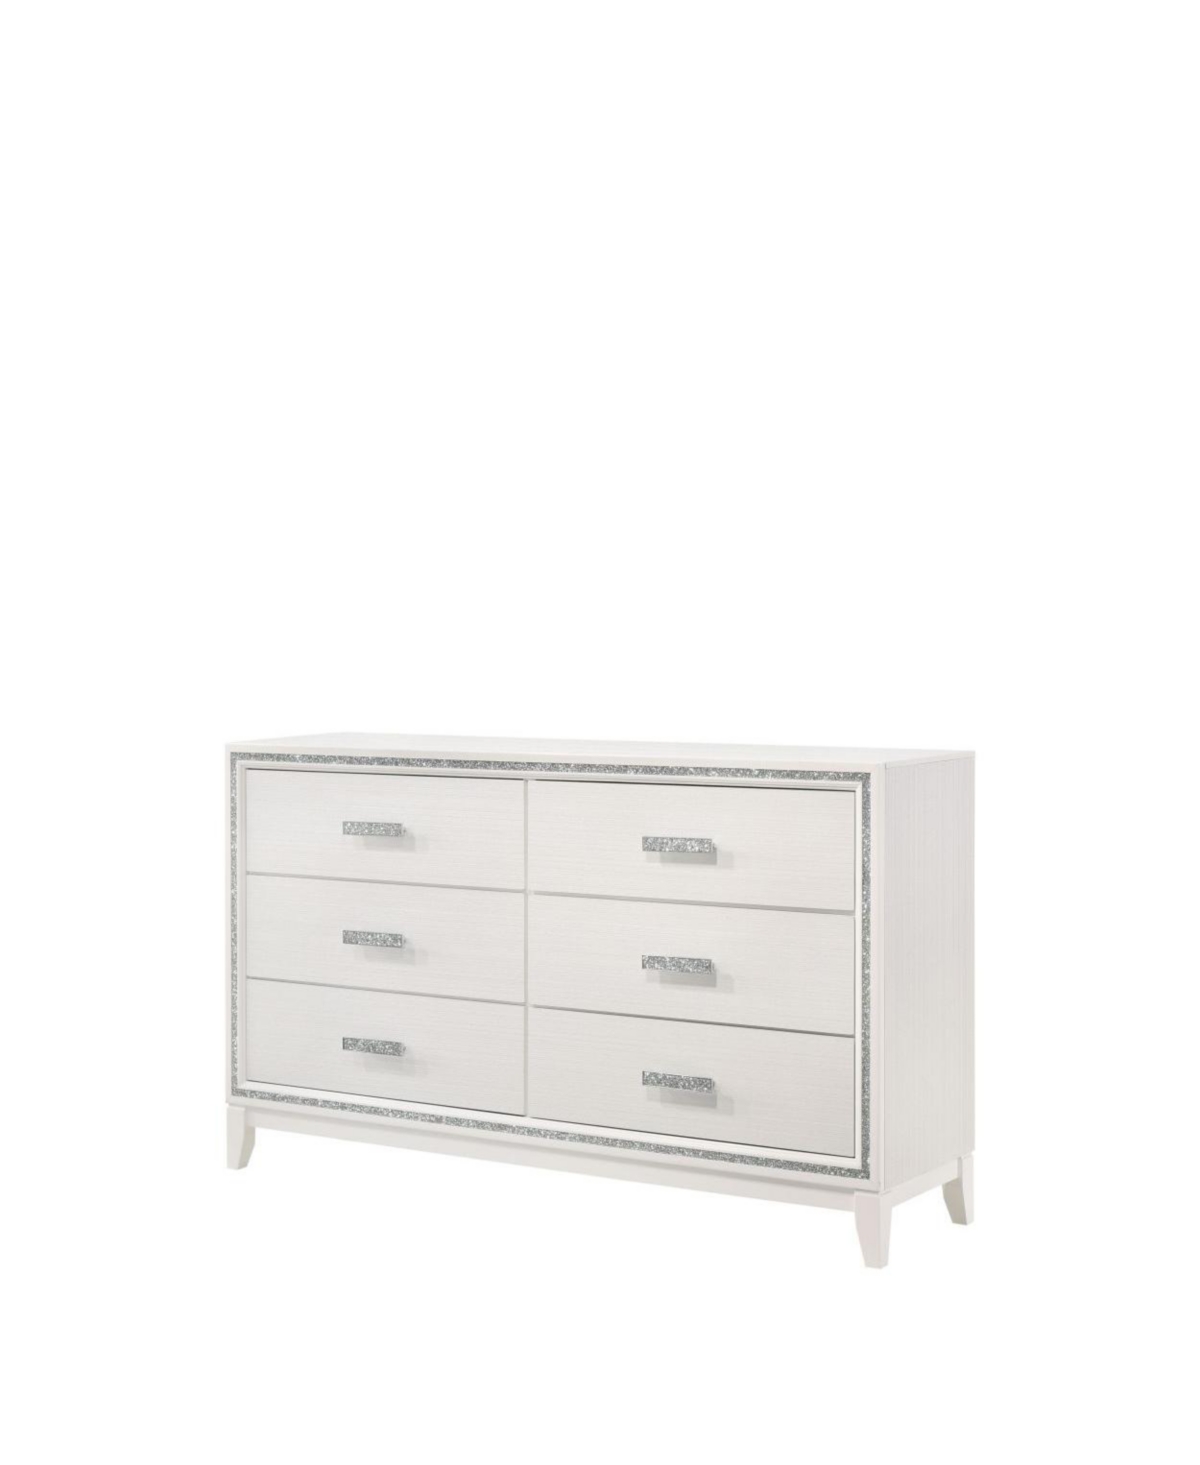 Haiden Dresser, White Finish - White